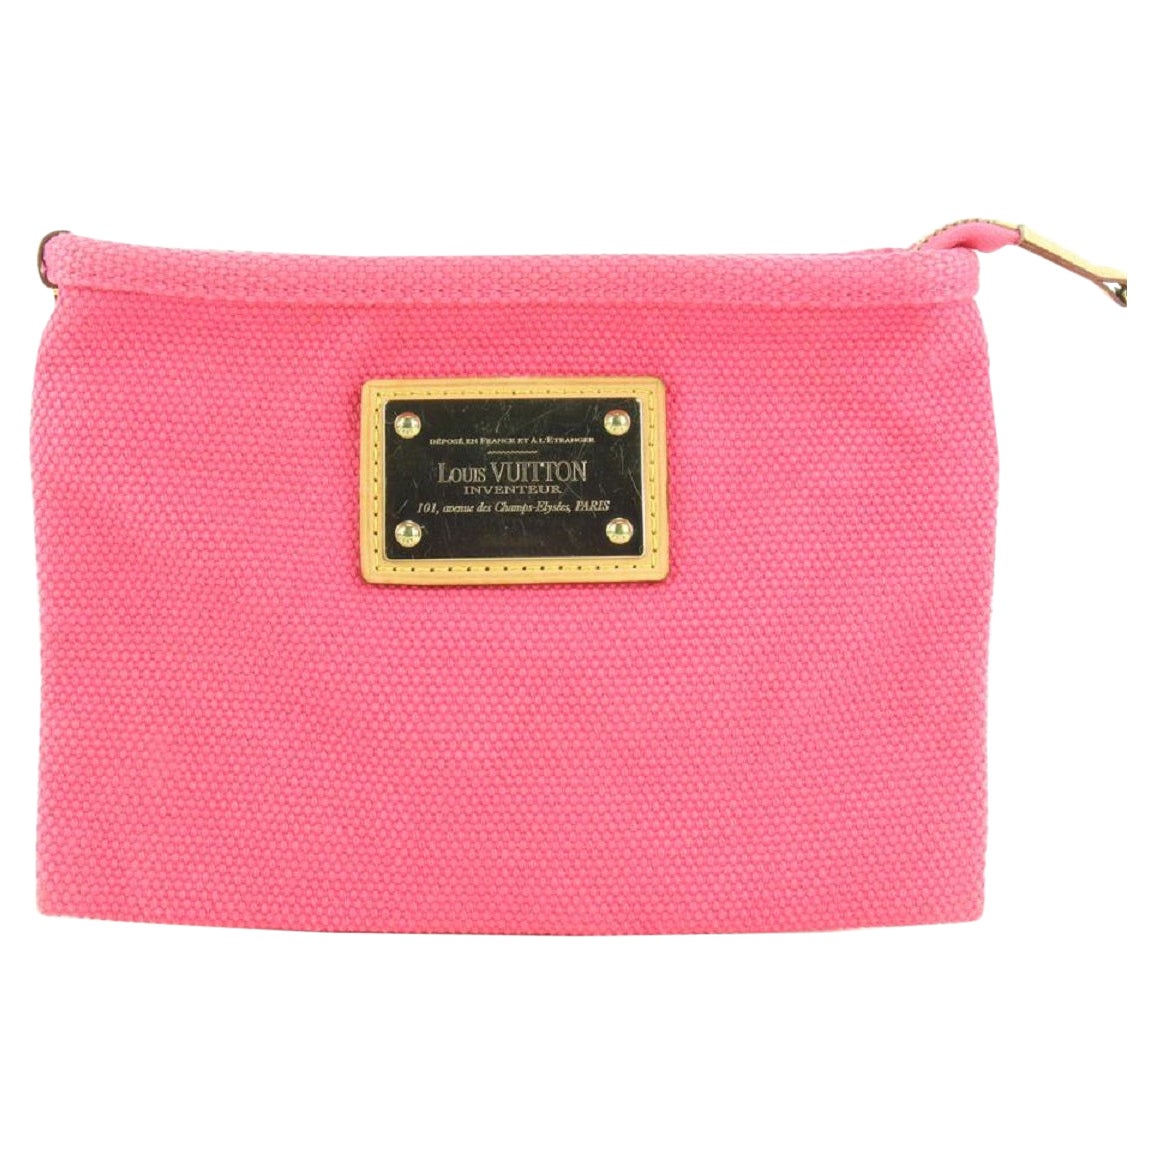 Louis Vuitton Hot Pink Antigua Pouch Bag 232185 For Sale